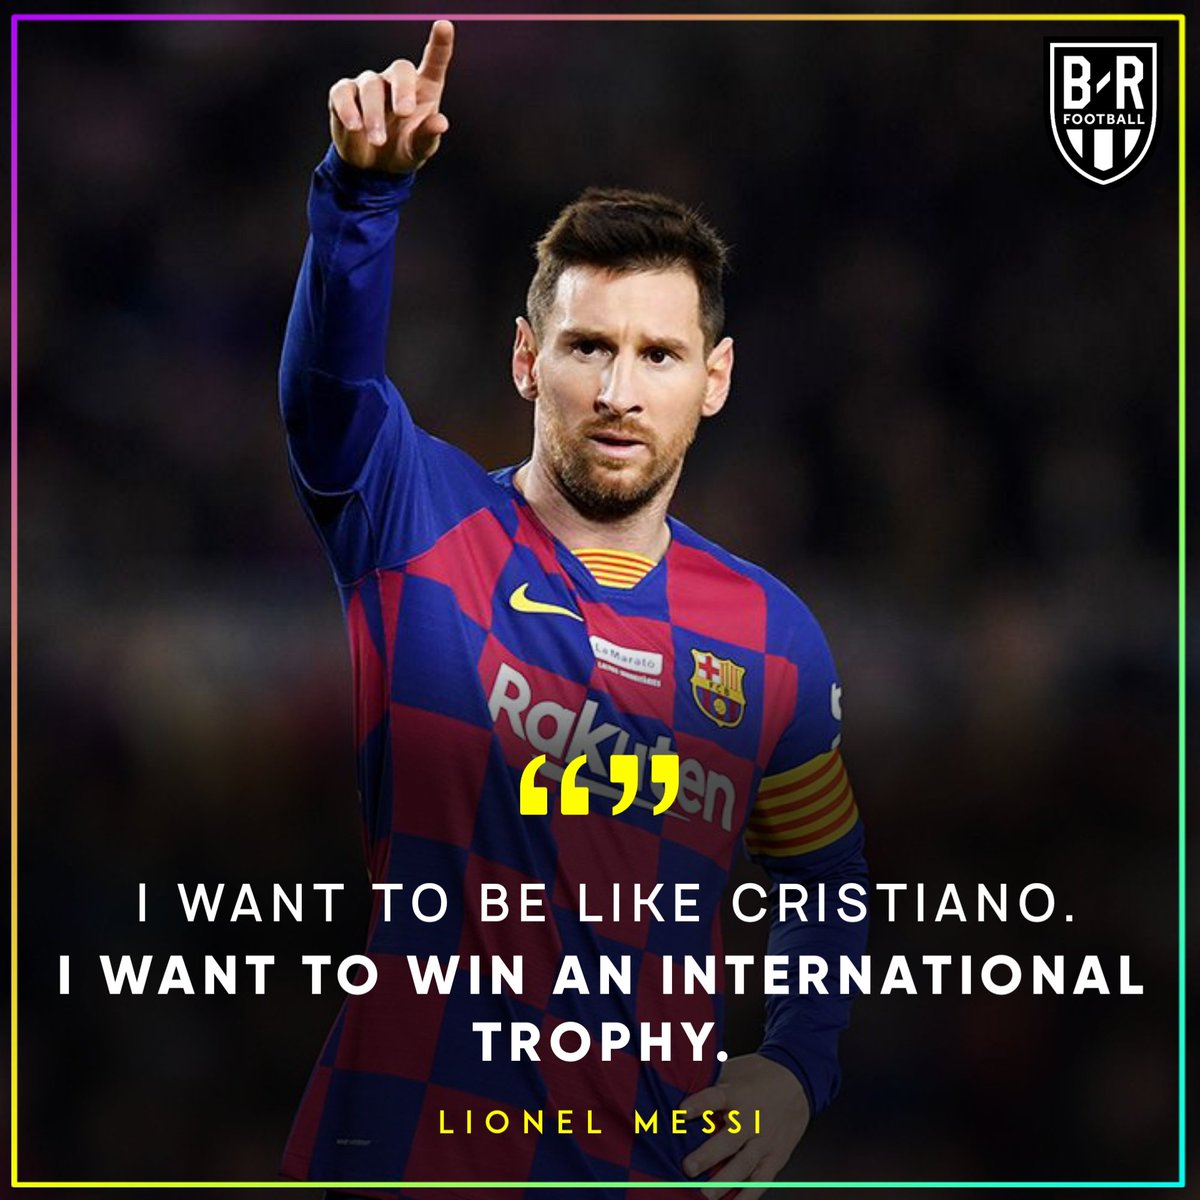  Messi: I want to be like Cristiano Ronaldo.